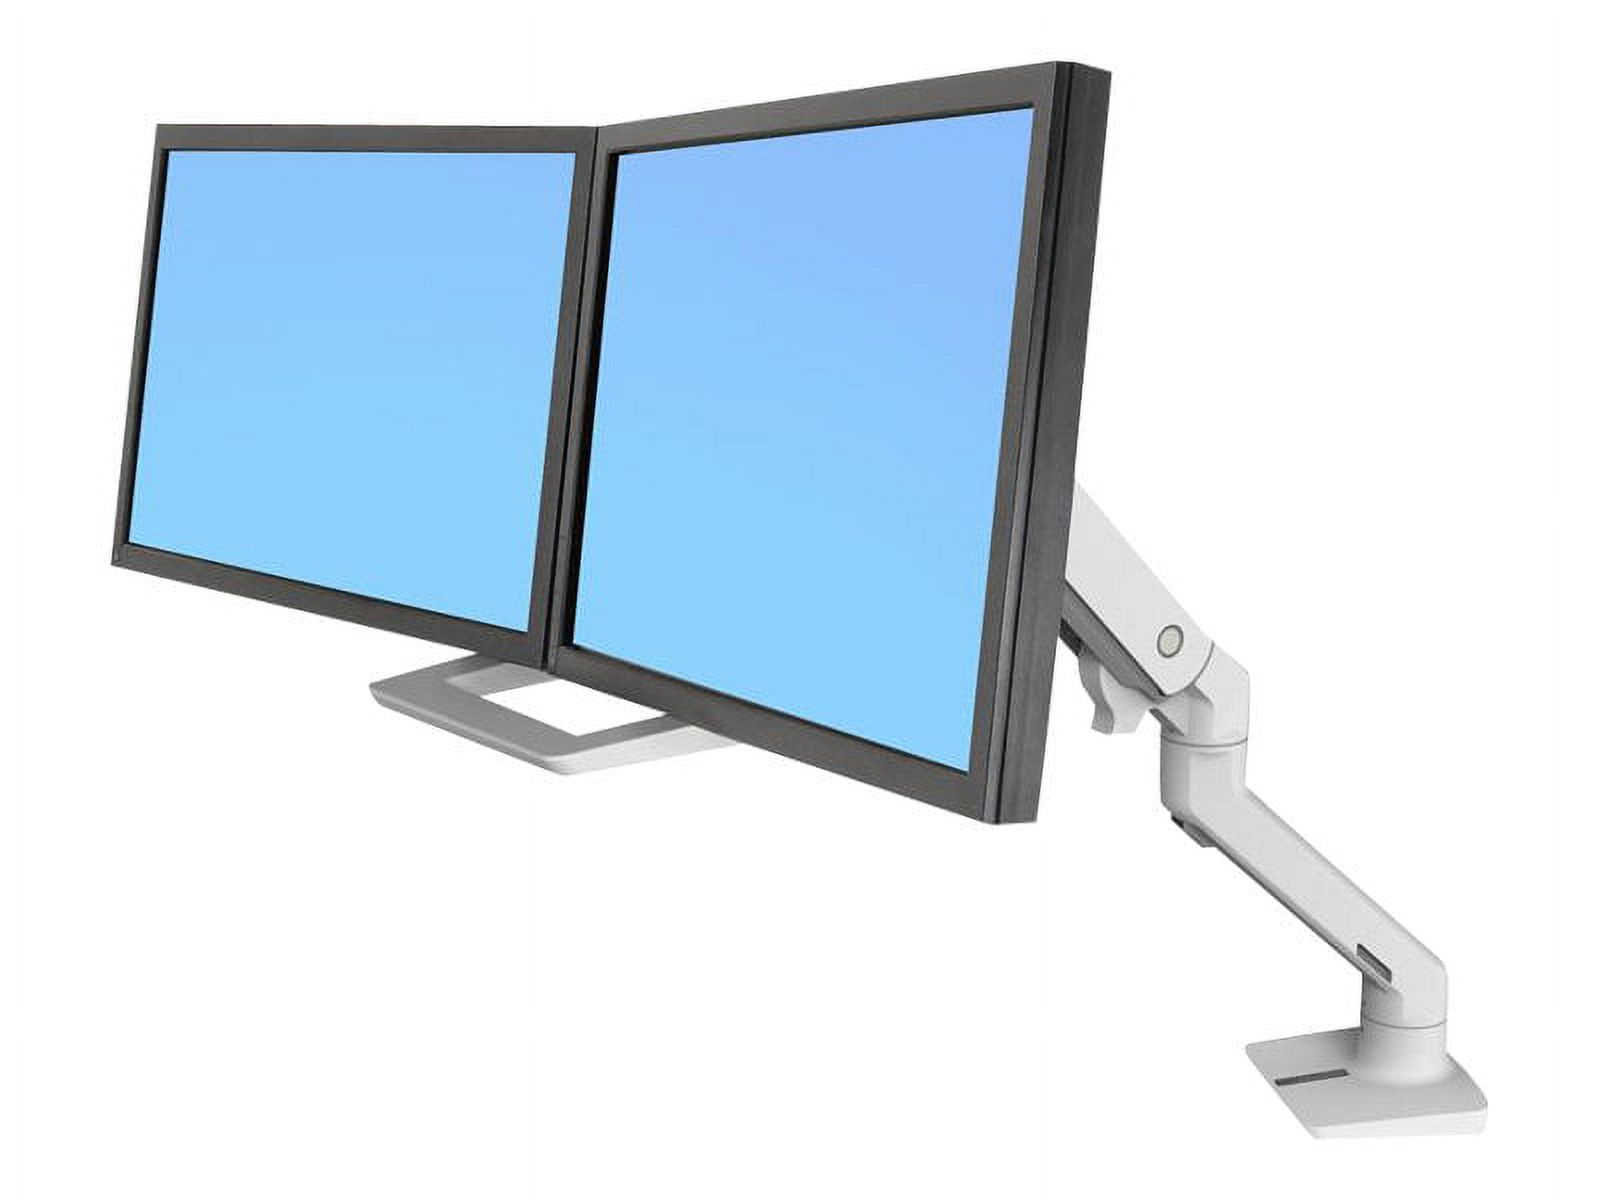 Ergotron 45-476-216 HX Desk Dual Monitor Arm Mounting Kit, Bright White - image 2 of 10